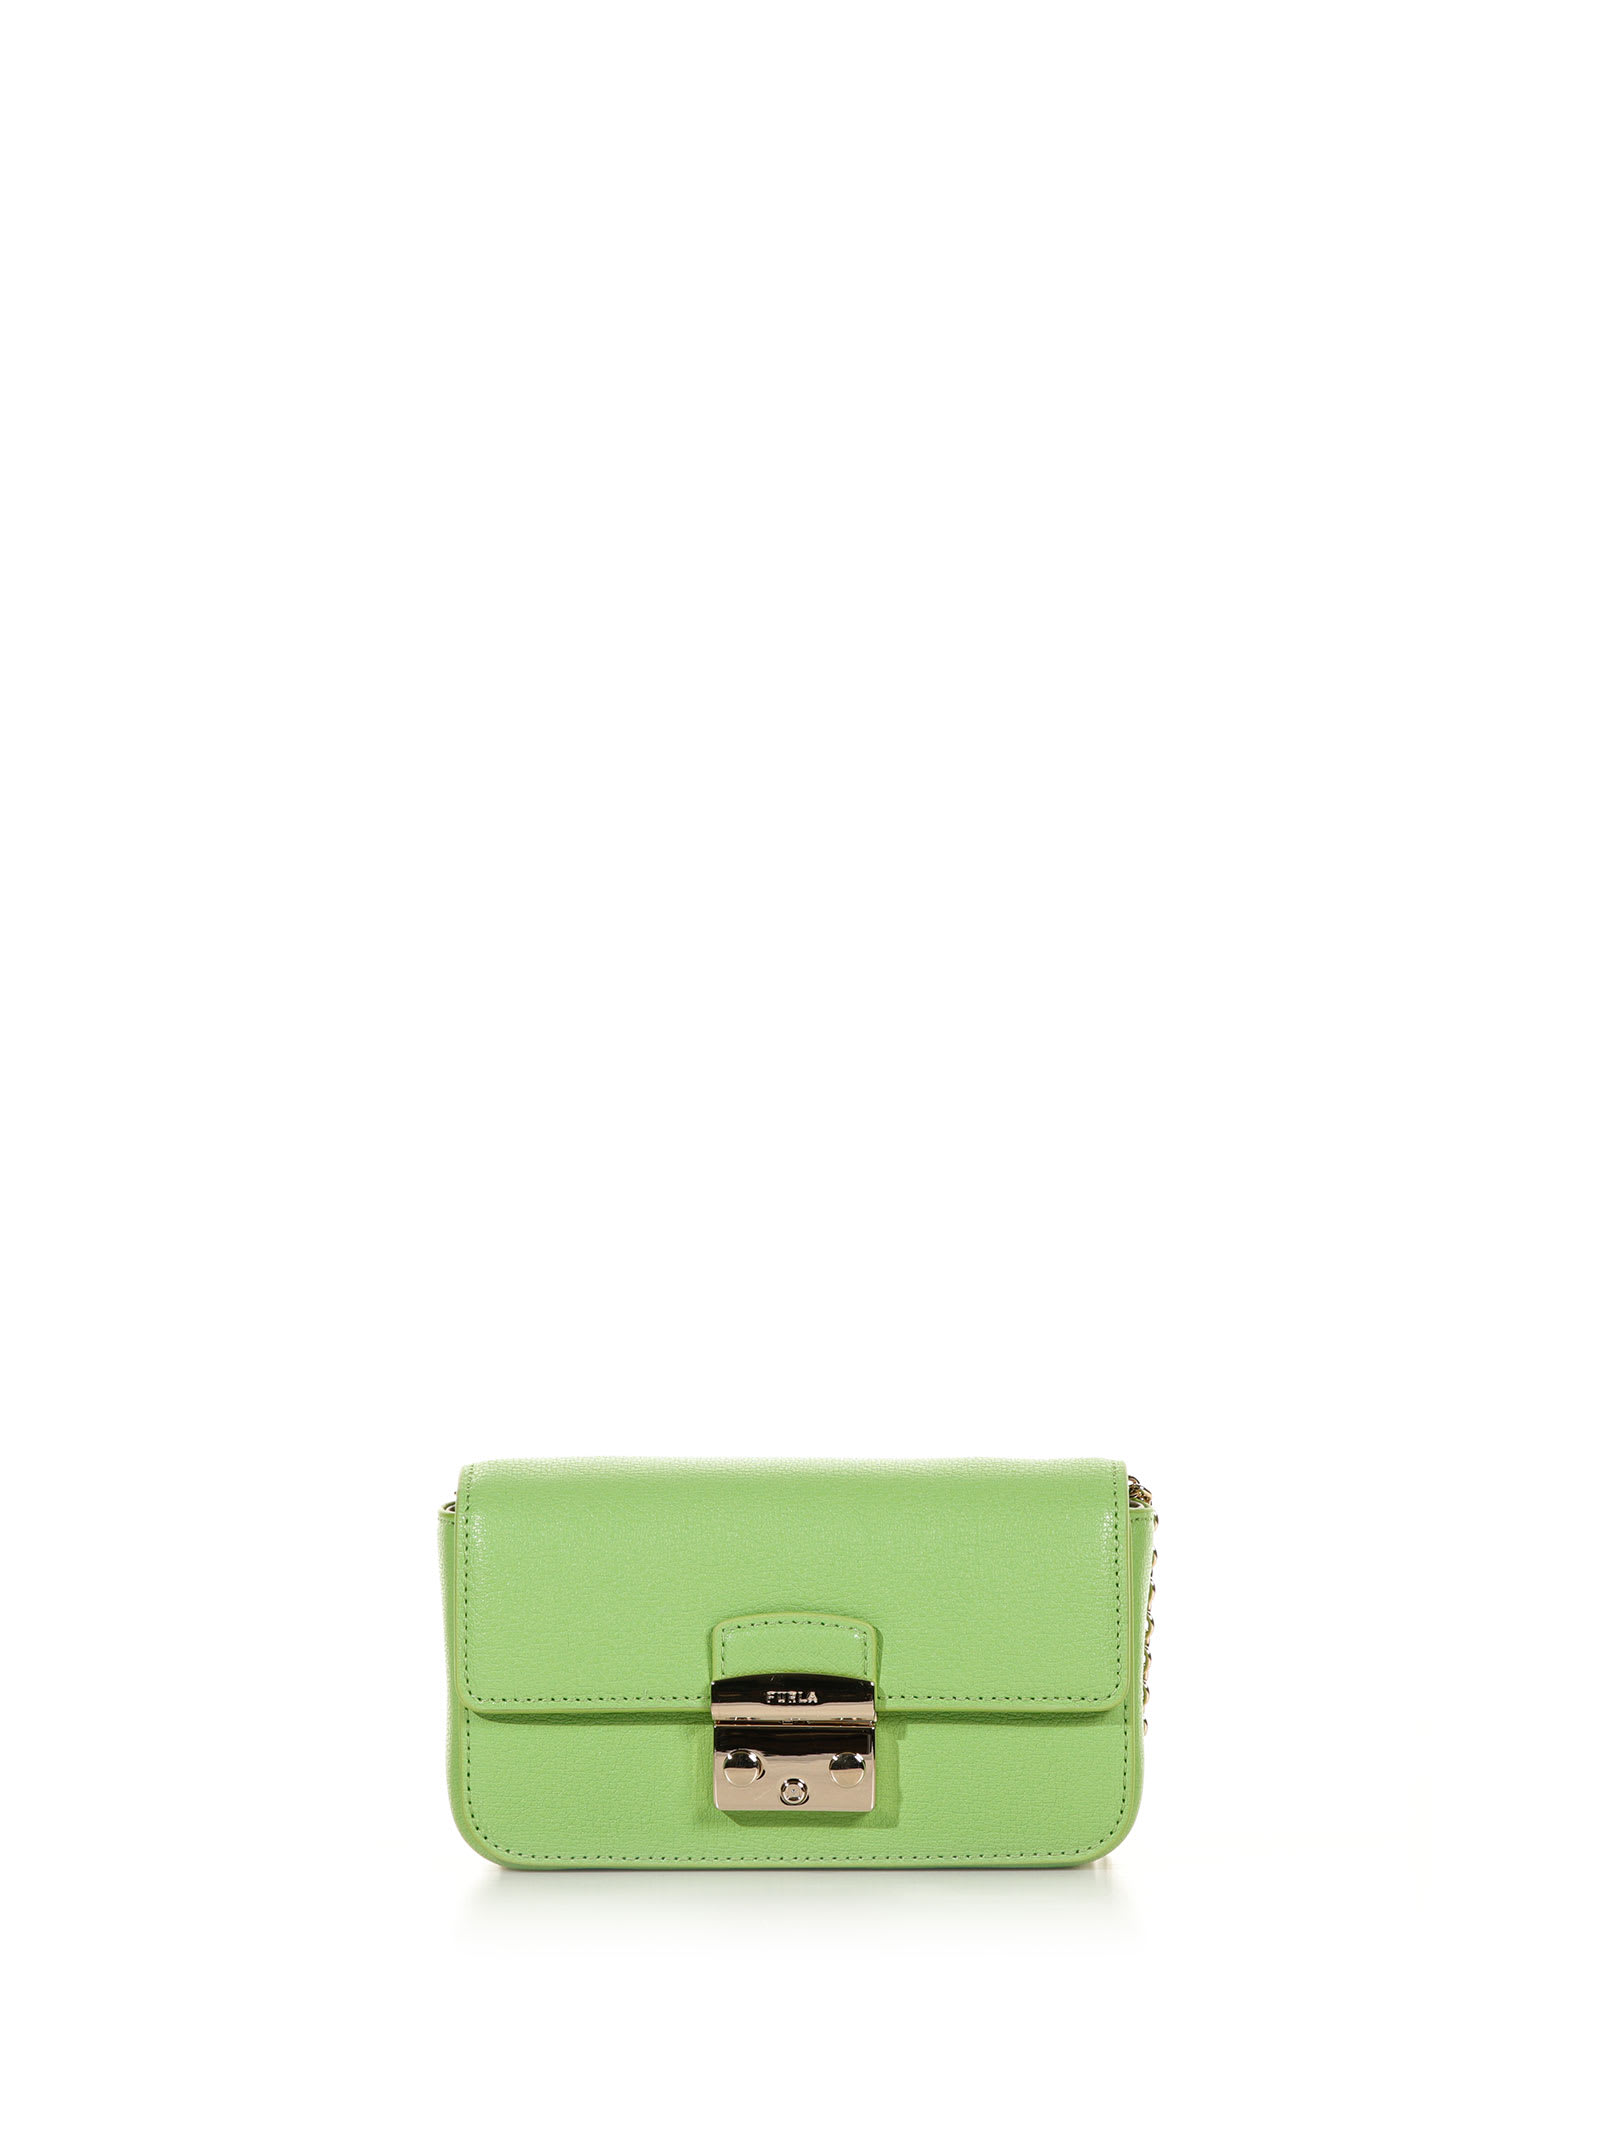 Furla Metropolis Mini Green Shoulder Bag